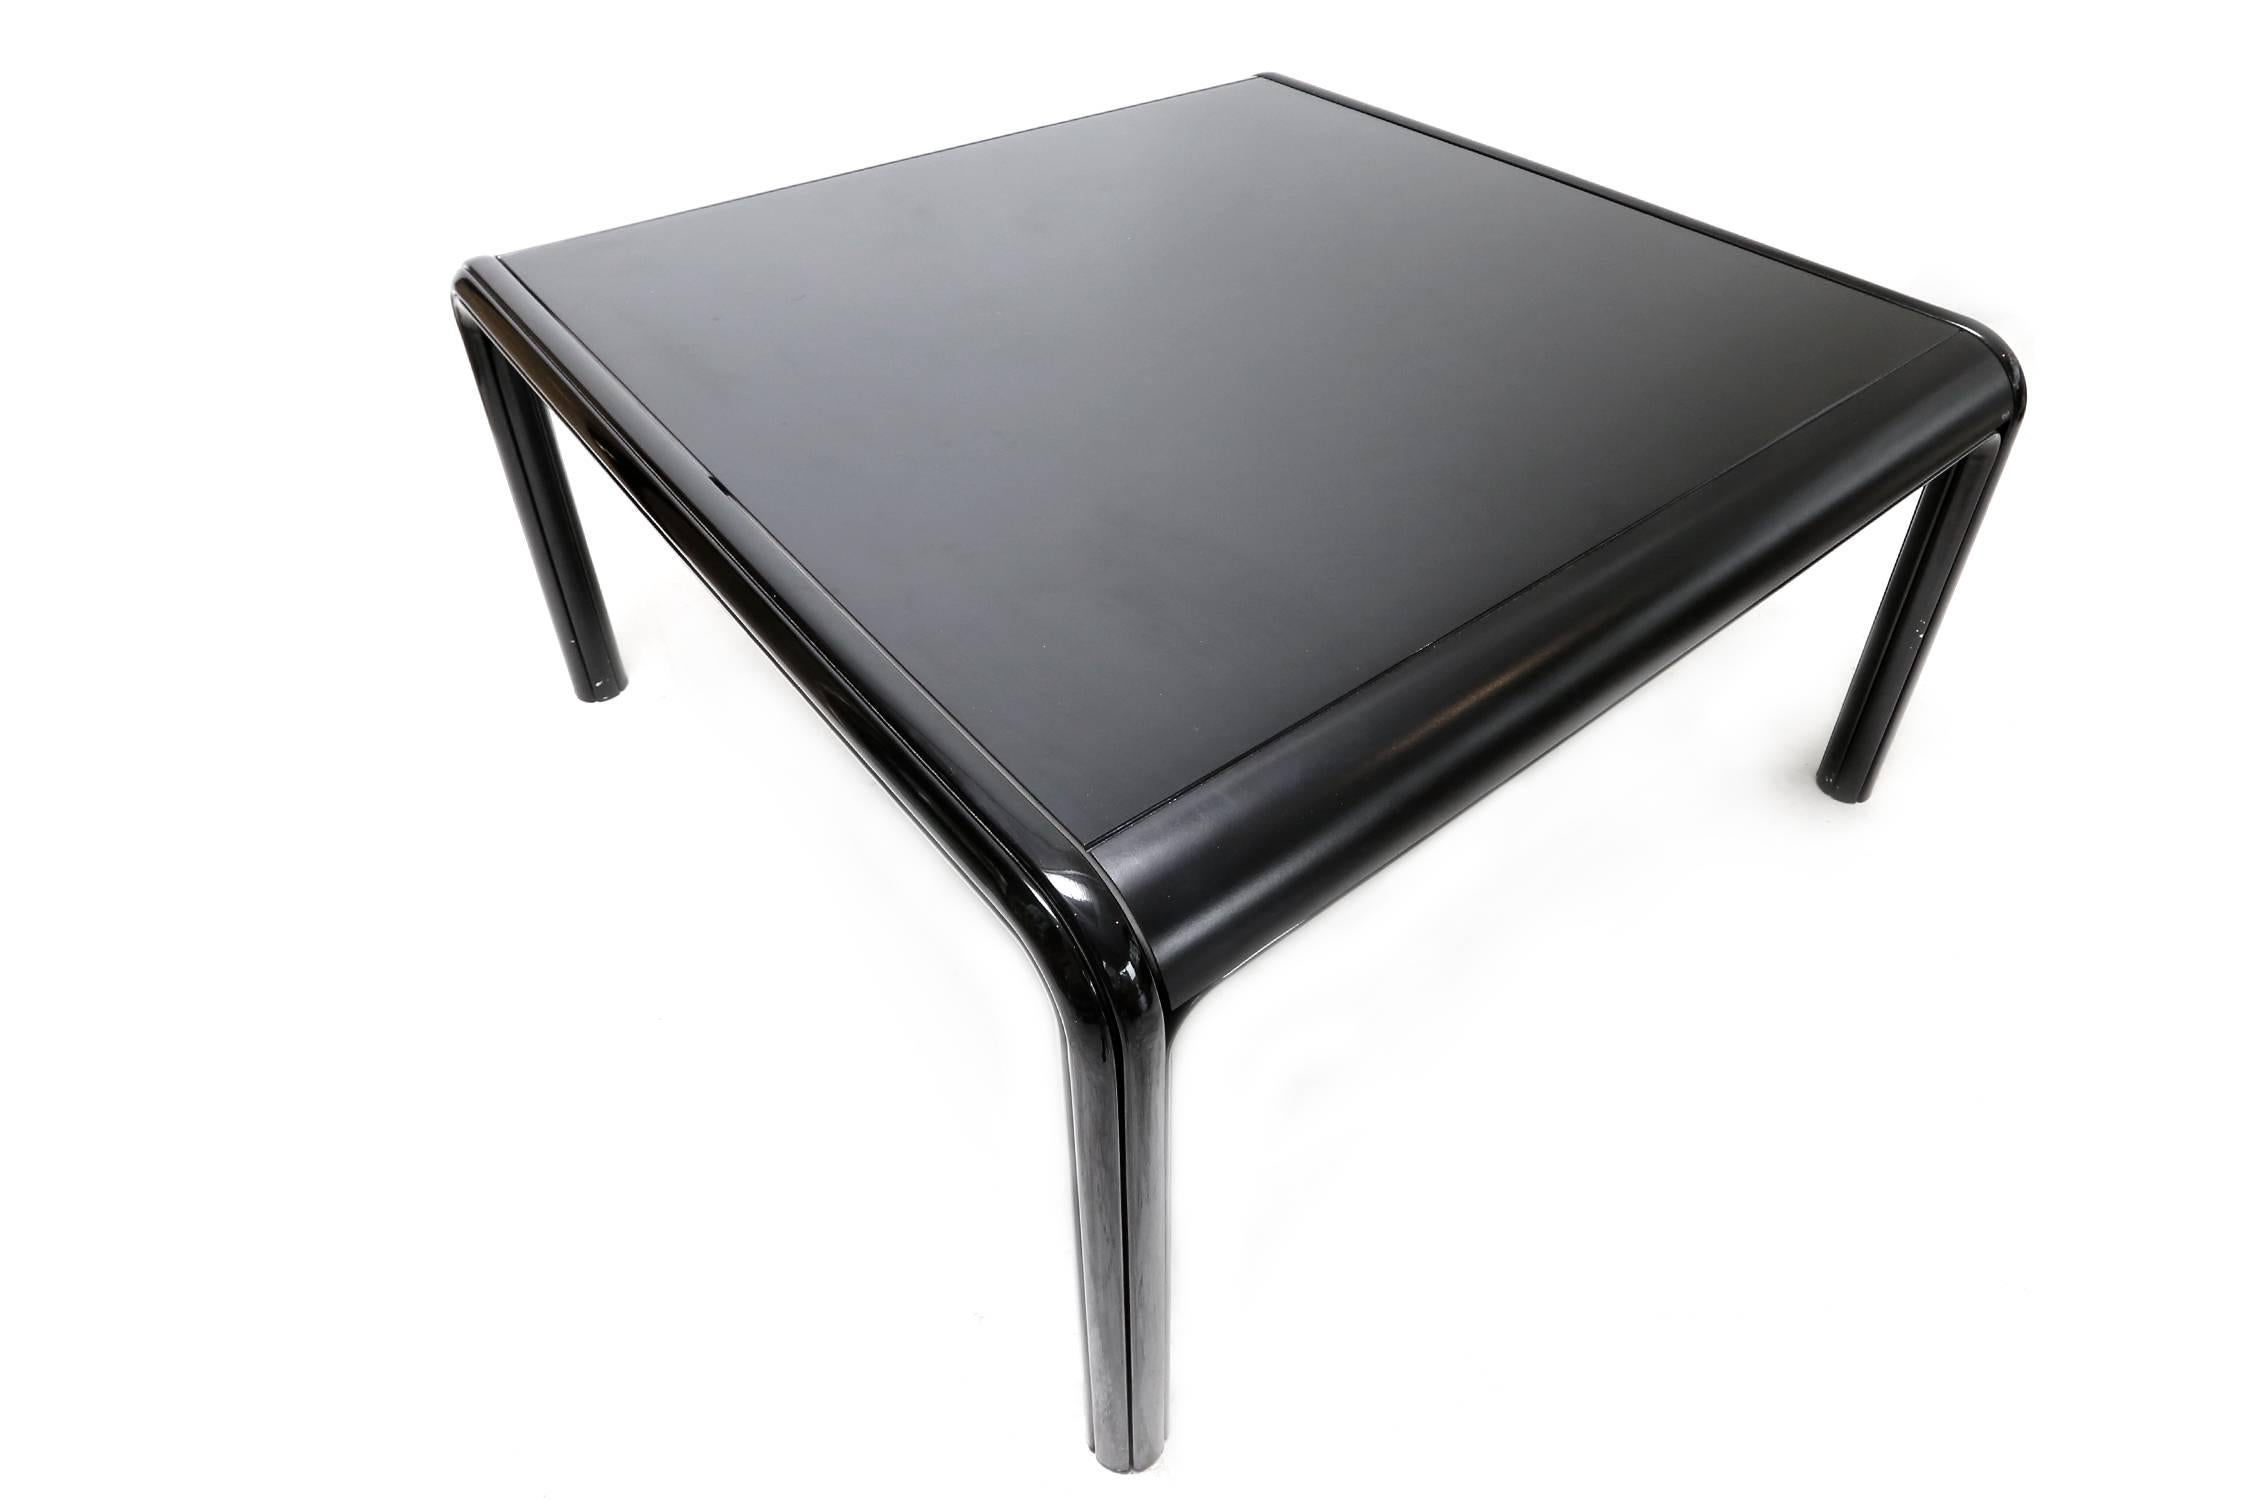 Square Dining Table  Black Lacquered metal base
Gae Aulenti  Knoll International  USA  1970s
L 145 cm x D 138 cm x H 74 cm